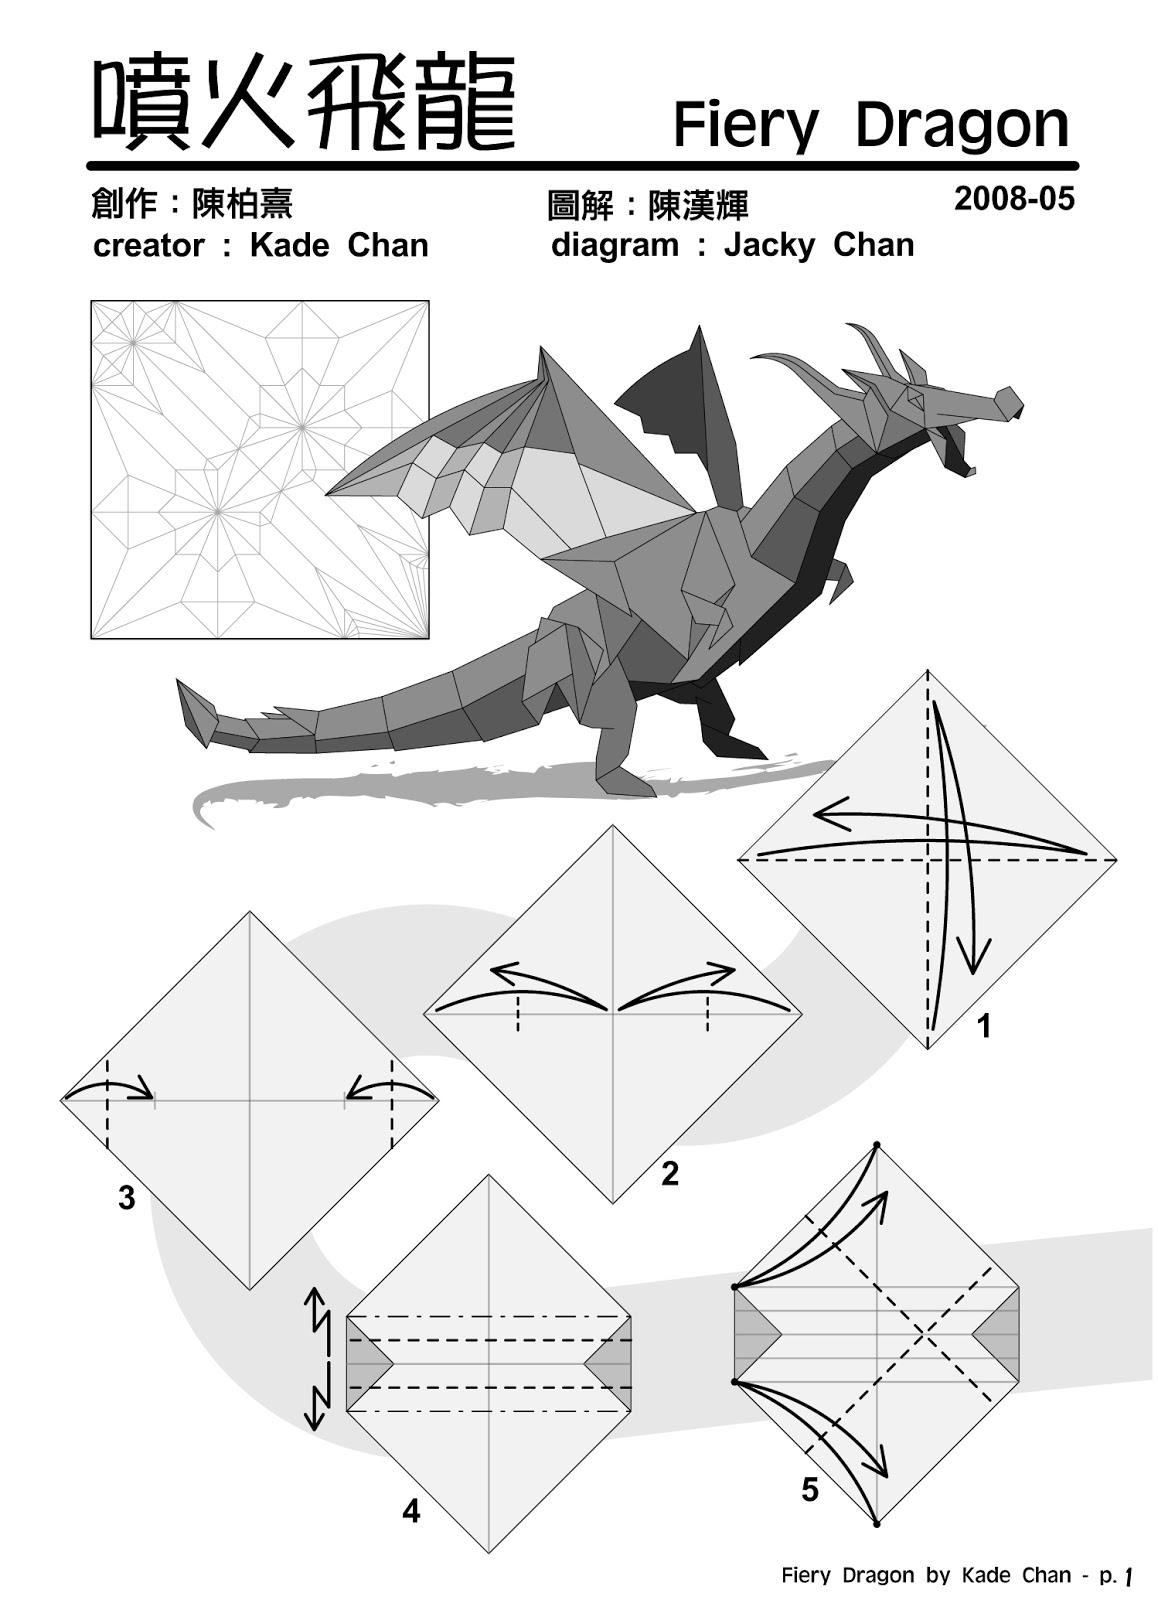 Origami Advanced Diagrams Complex Origami Diagram Diagrams For Origami Models Wiring